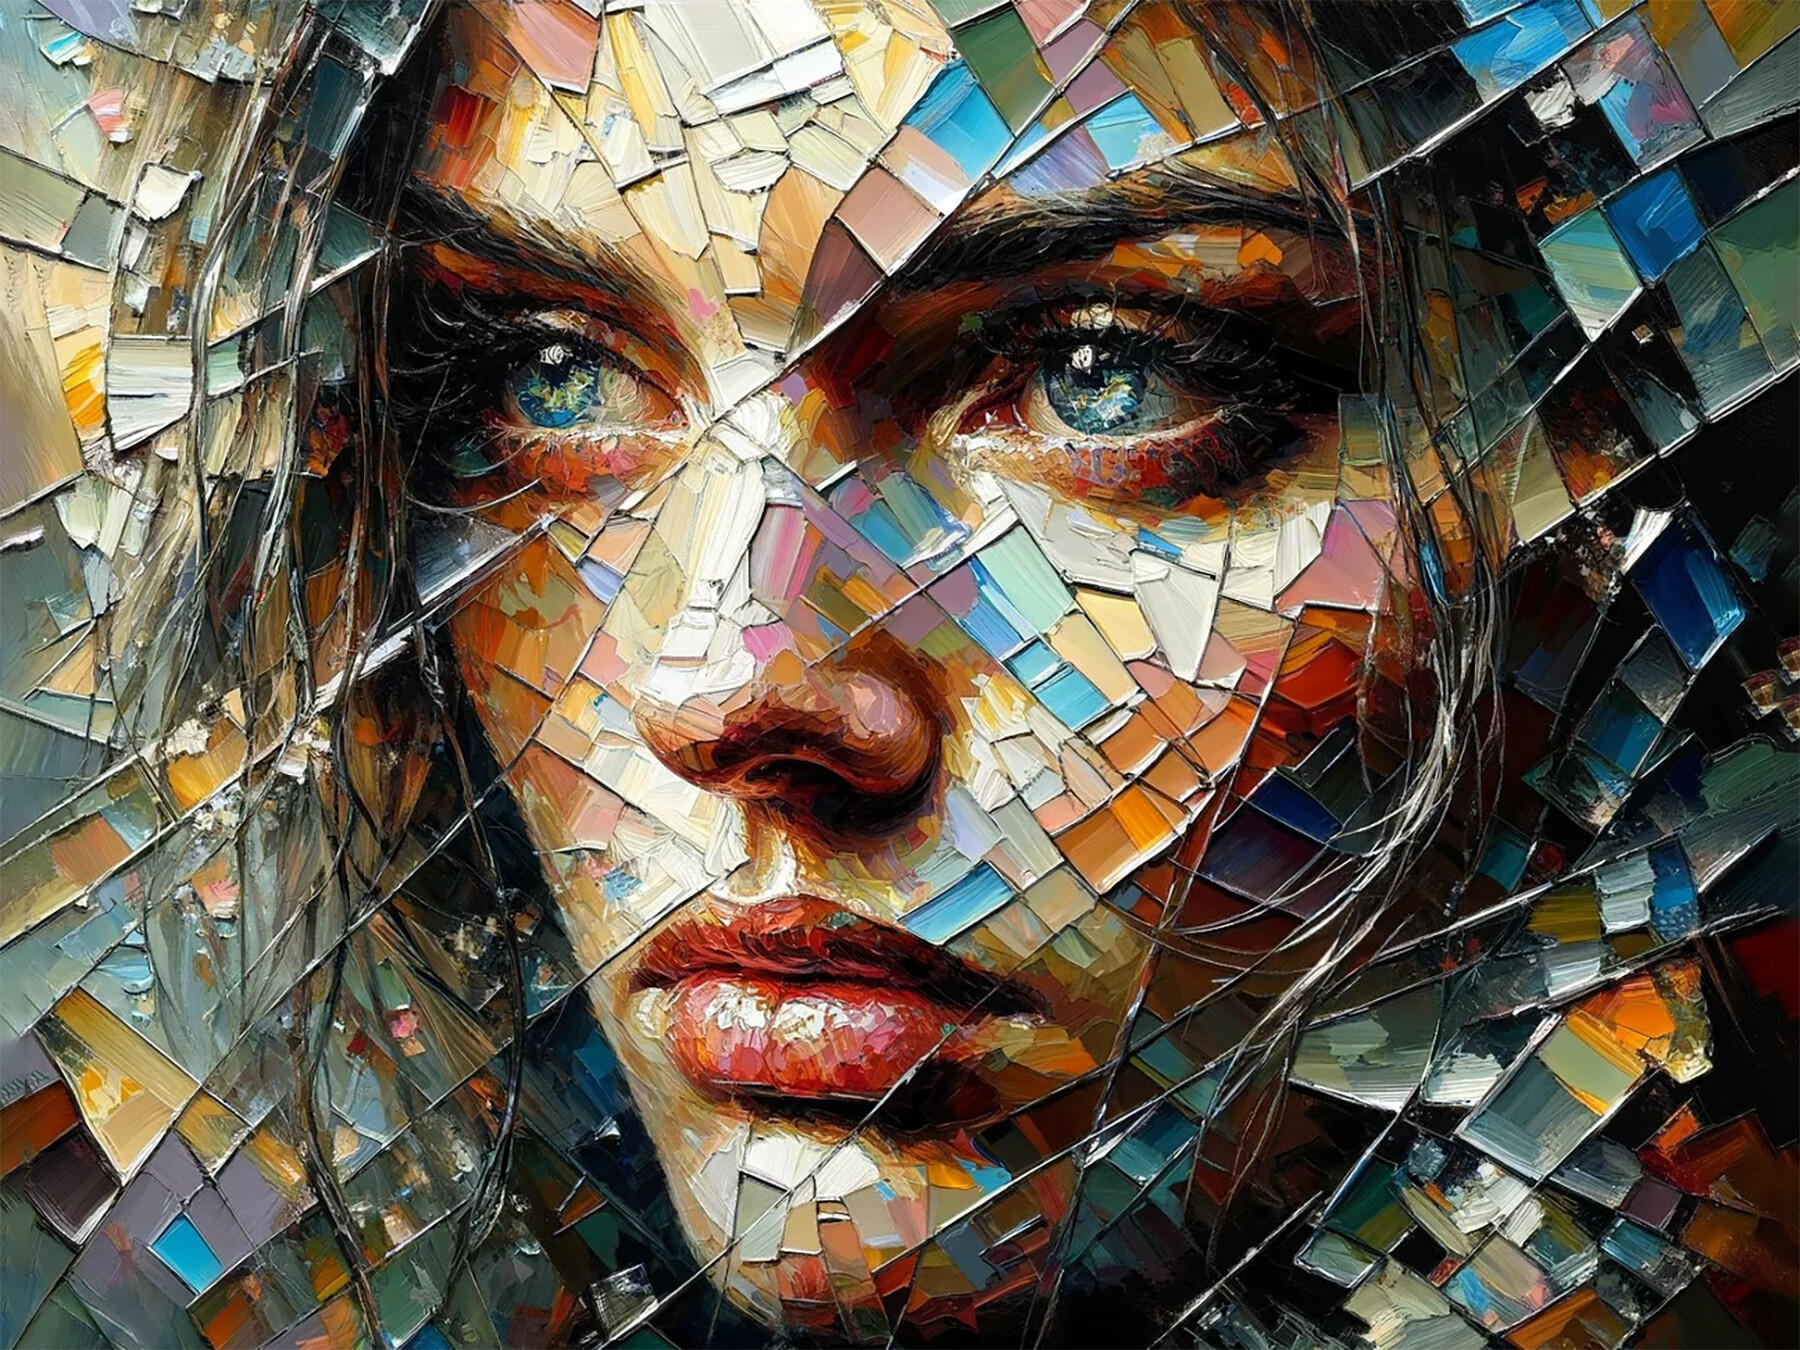 ArtStation - Shattered Beauty: Mosaic Reflections